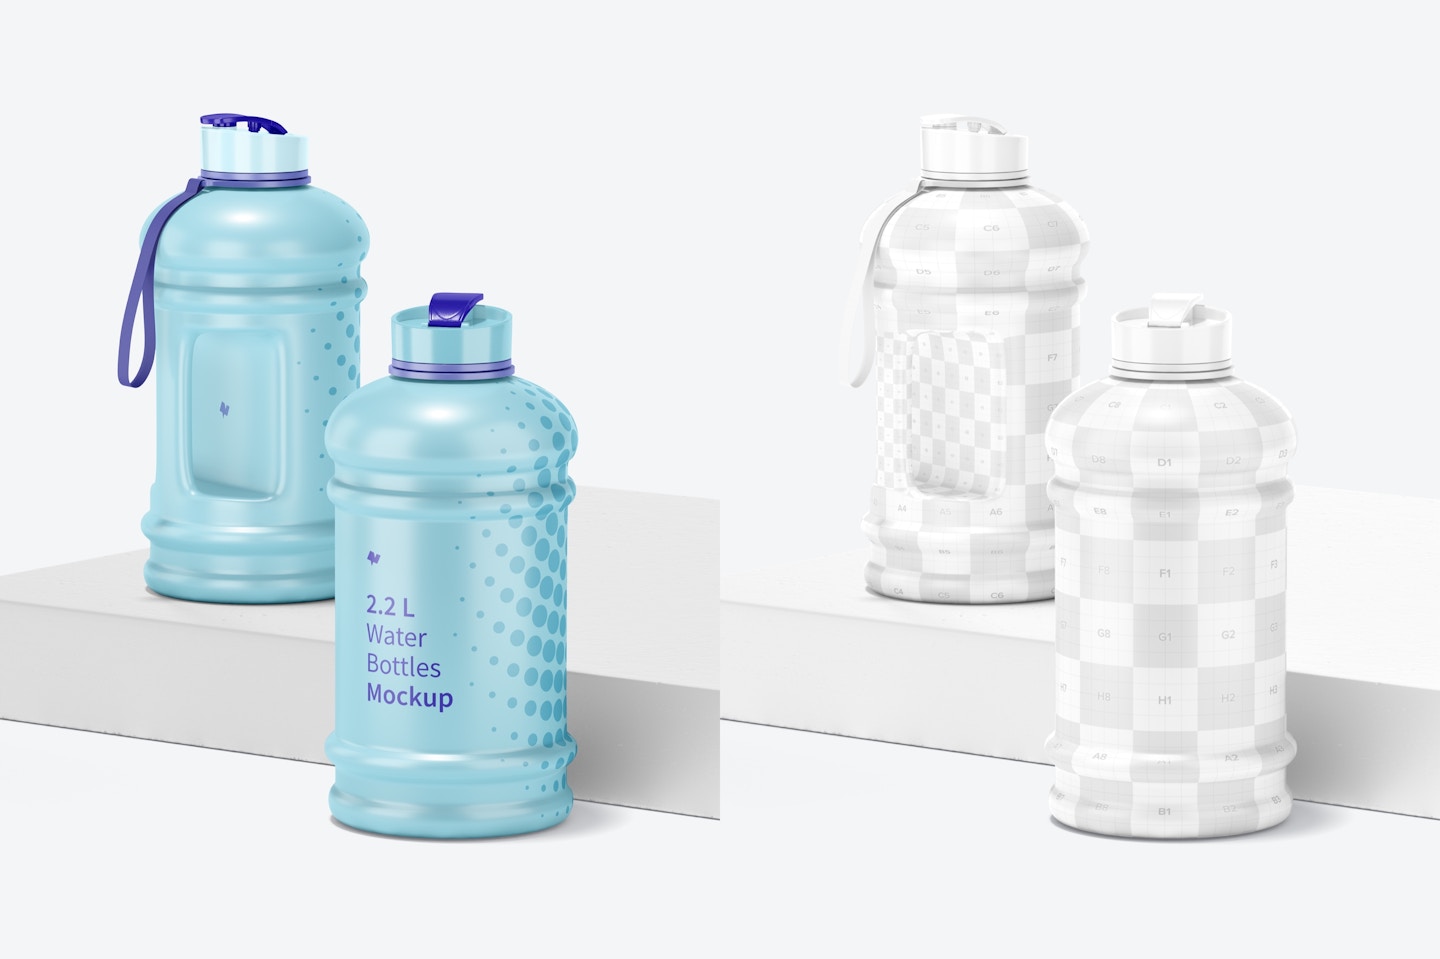 2.2 L Water Bottles Mockup, Perspective